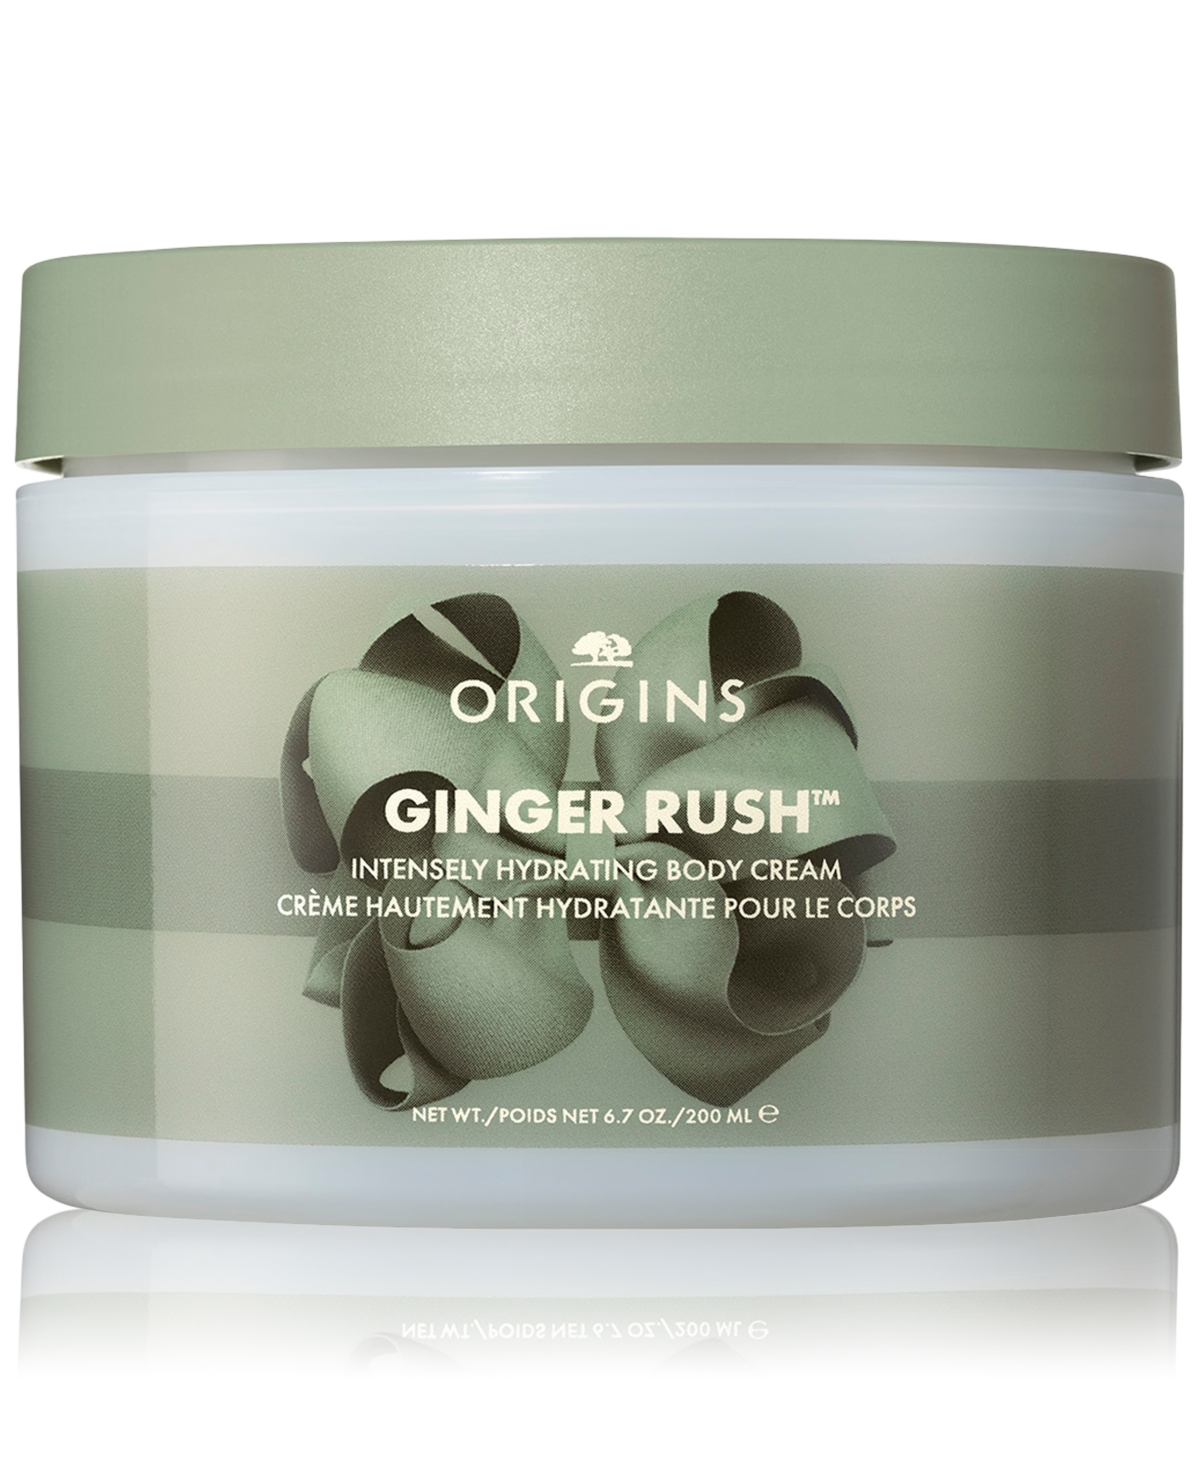 Origins Ginger Rush Intensely Hydrating Body Cream, 6.7 Oz.